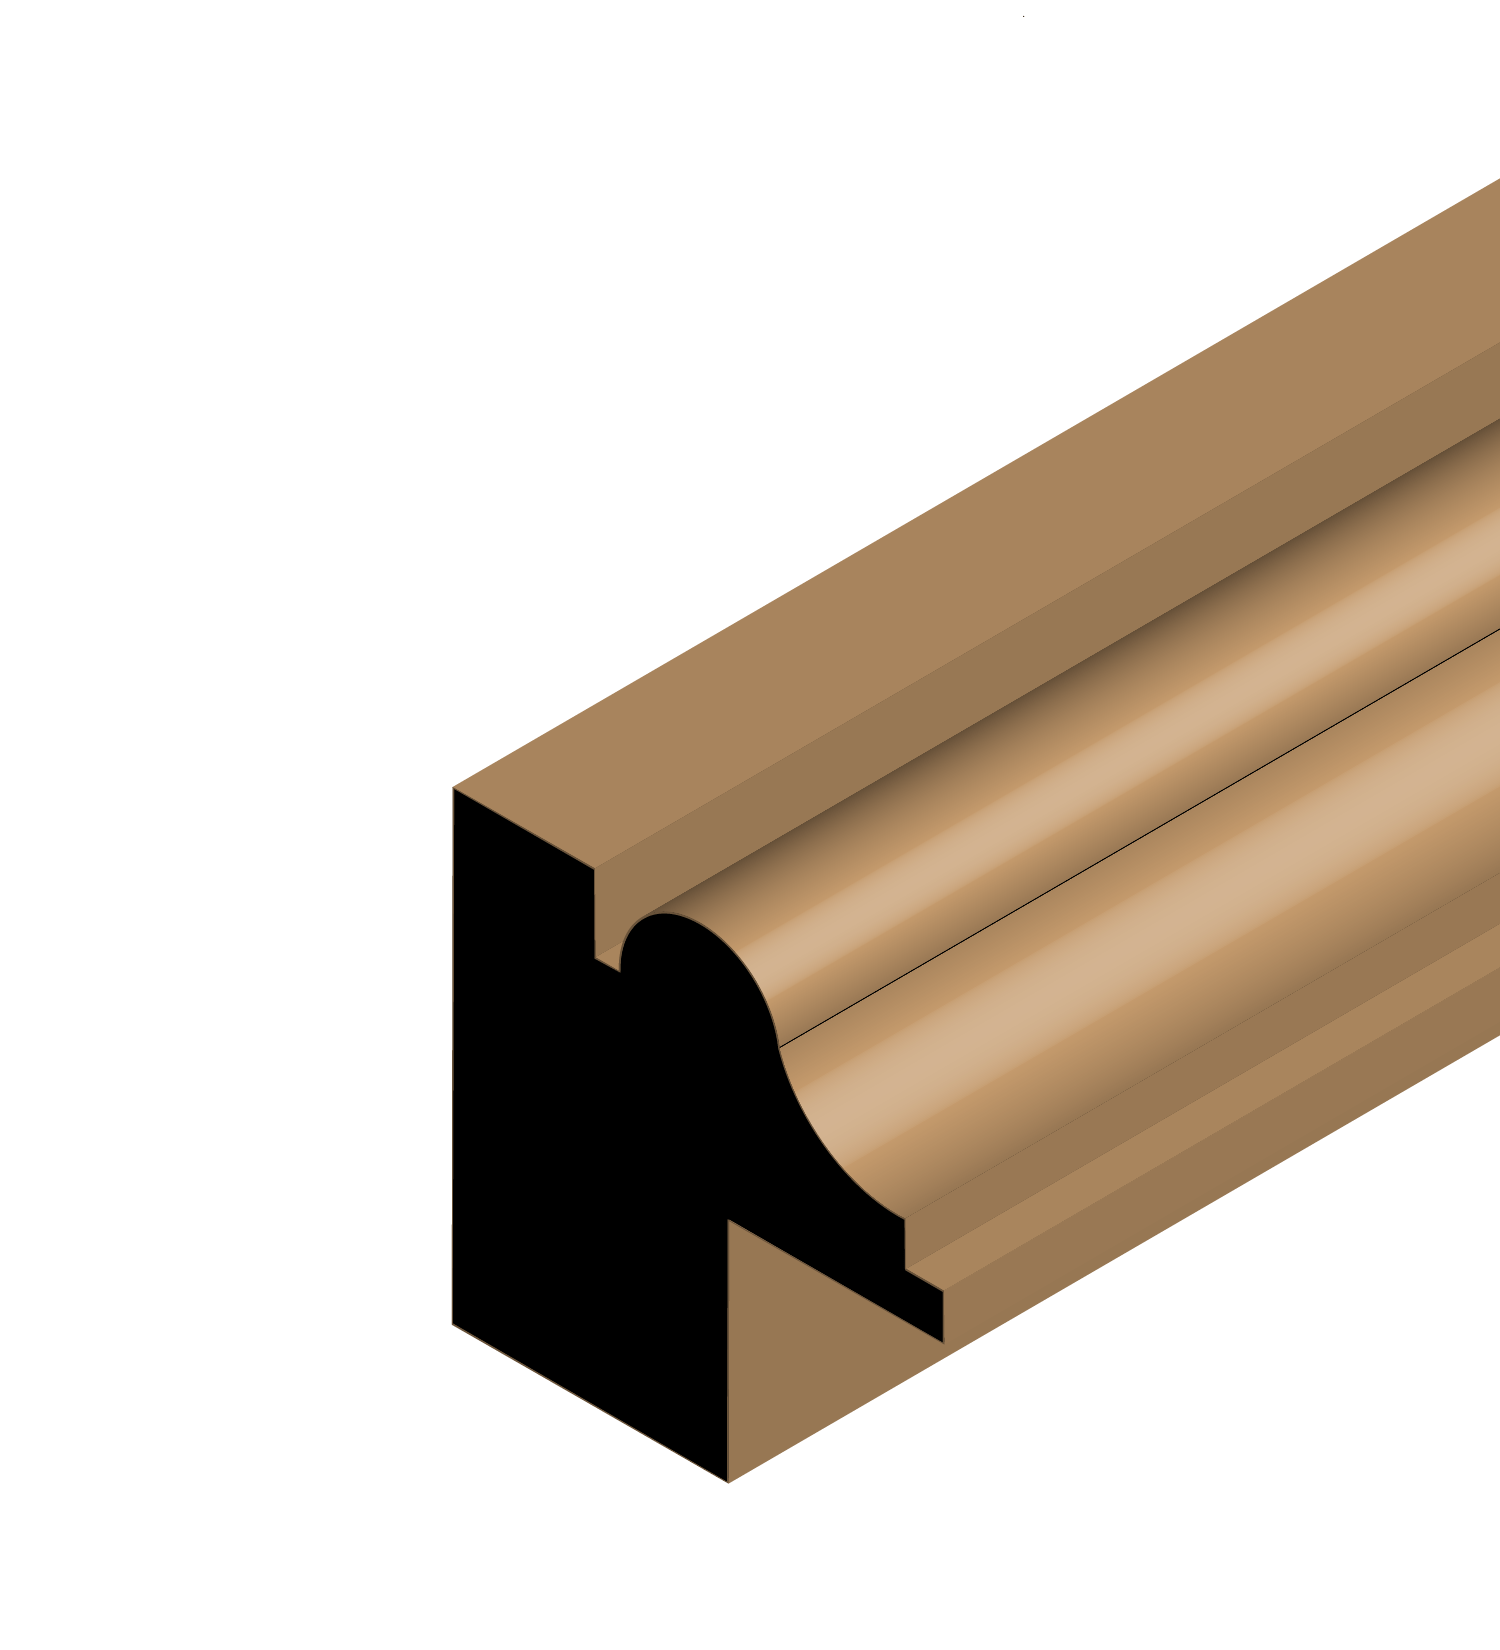 wood-trim